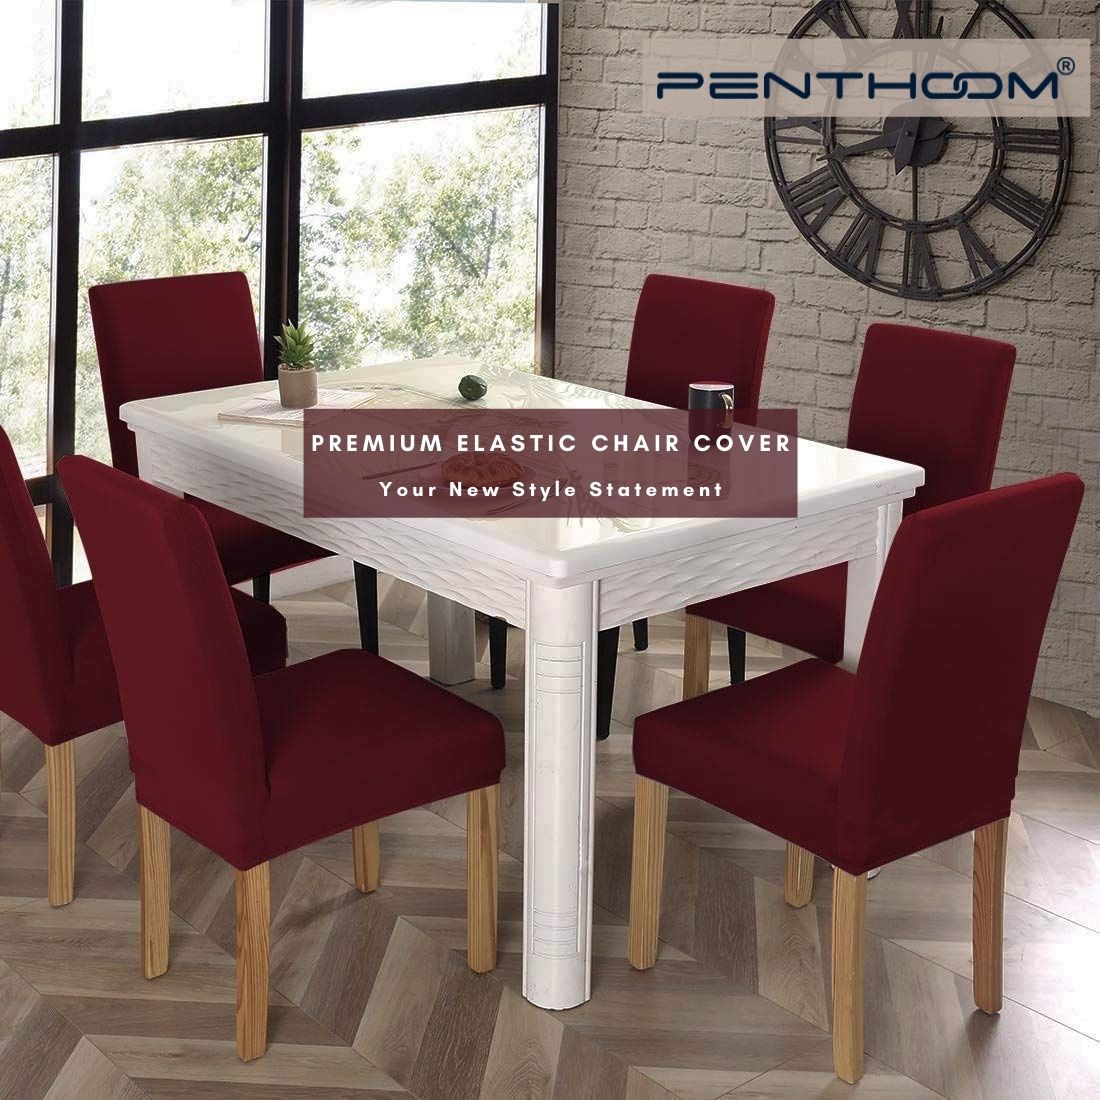 PENTHOOM Elastic Dining Chair Cover - Premium Fabric Seat Slipcover - Maroon